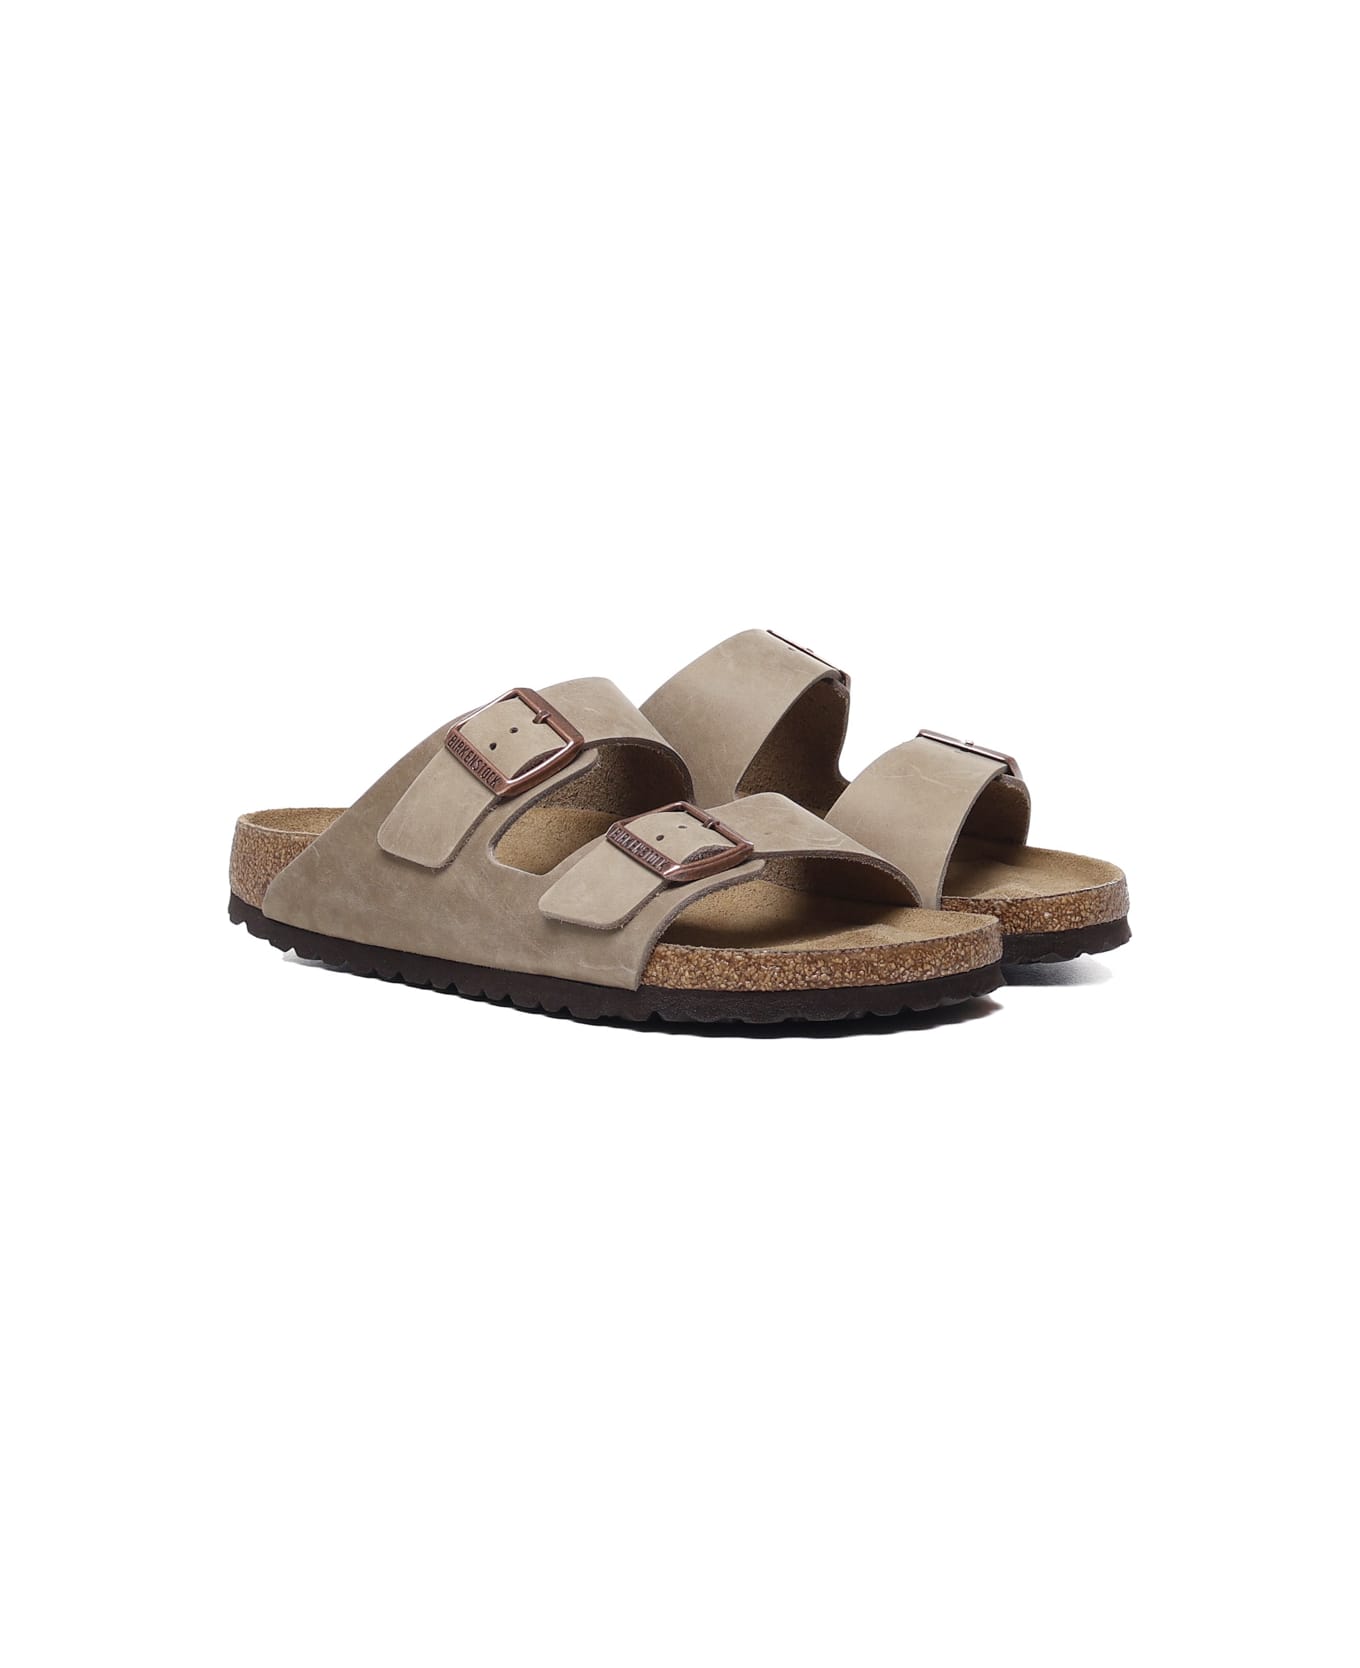 Birkenstock Arizona Sandals - Tabacco brown